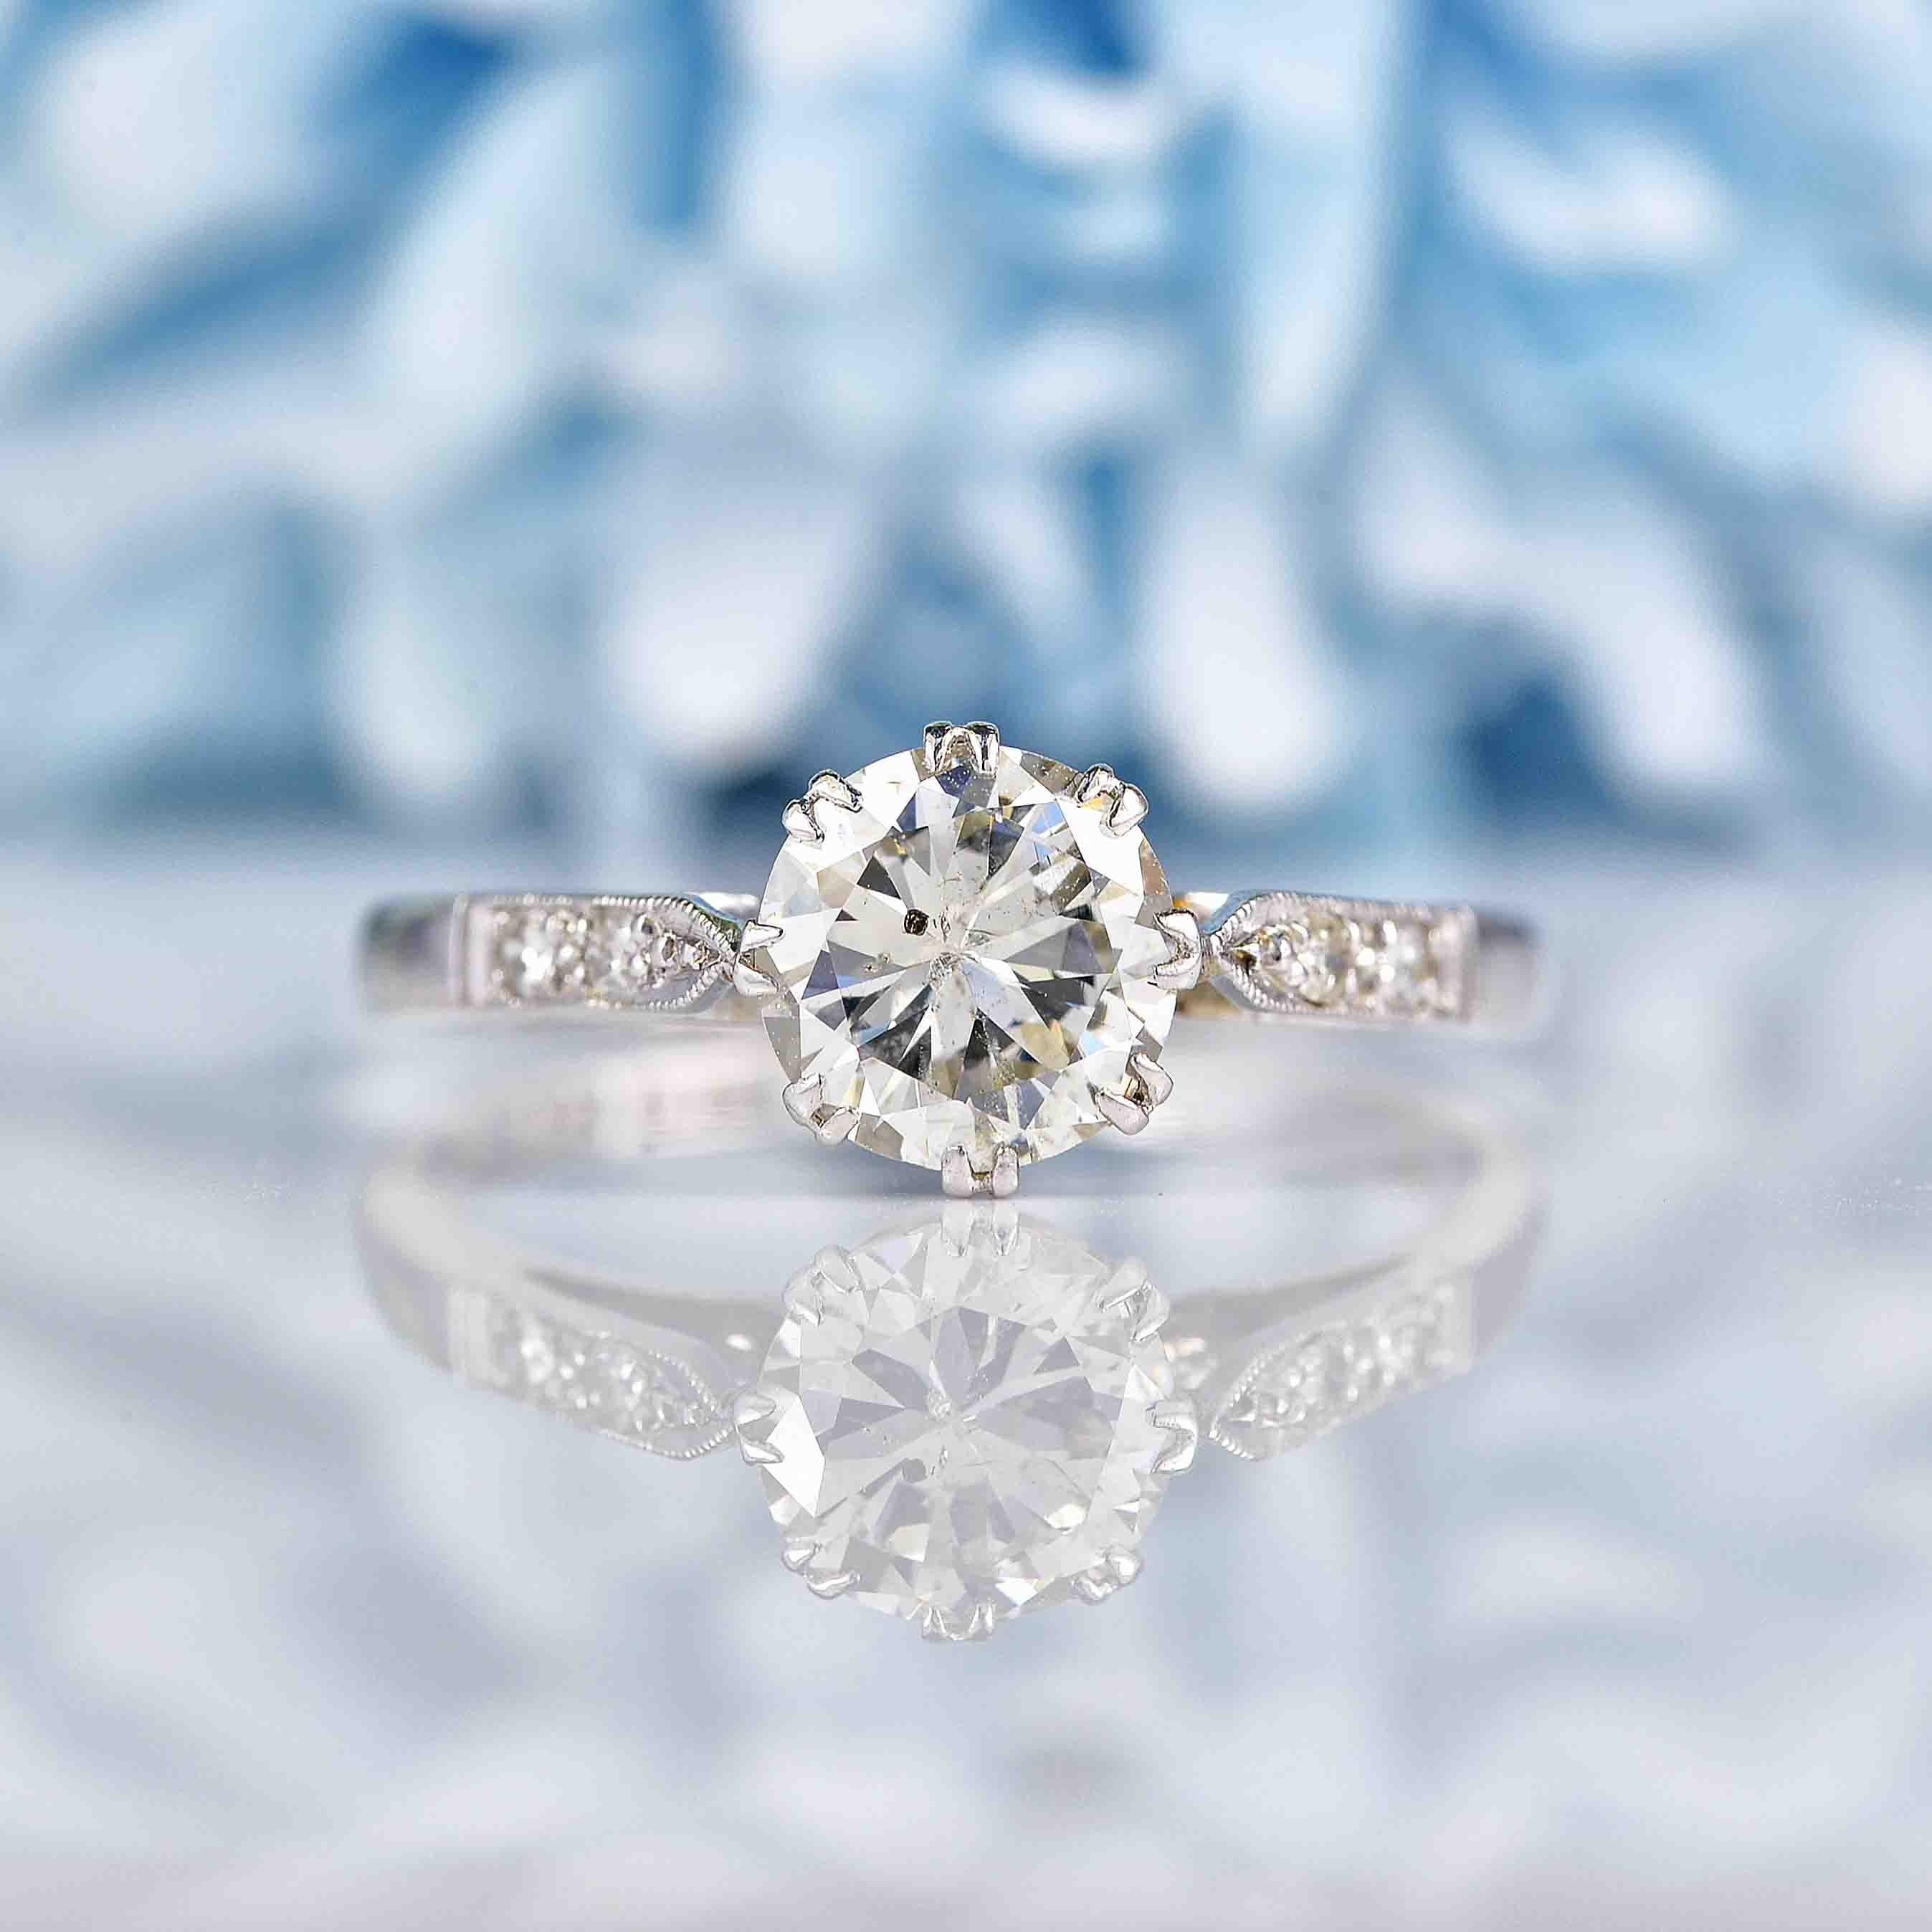 Ellibelle Jewellery Art Deco Diamond 18ct White Gold Solitaire Engagement Ring (1.11ct)